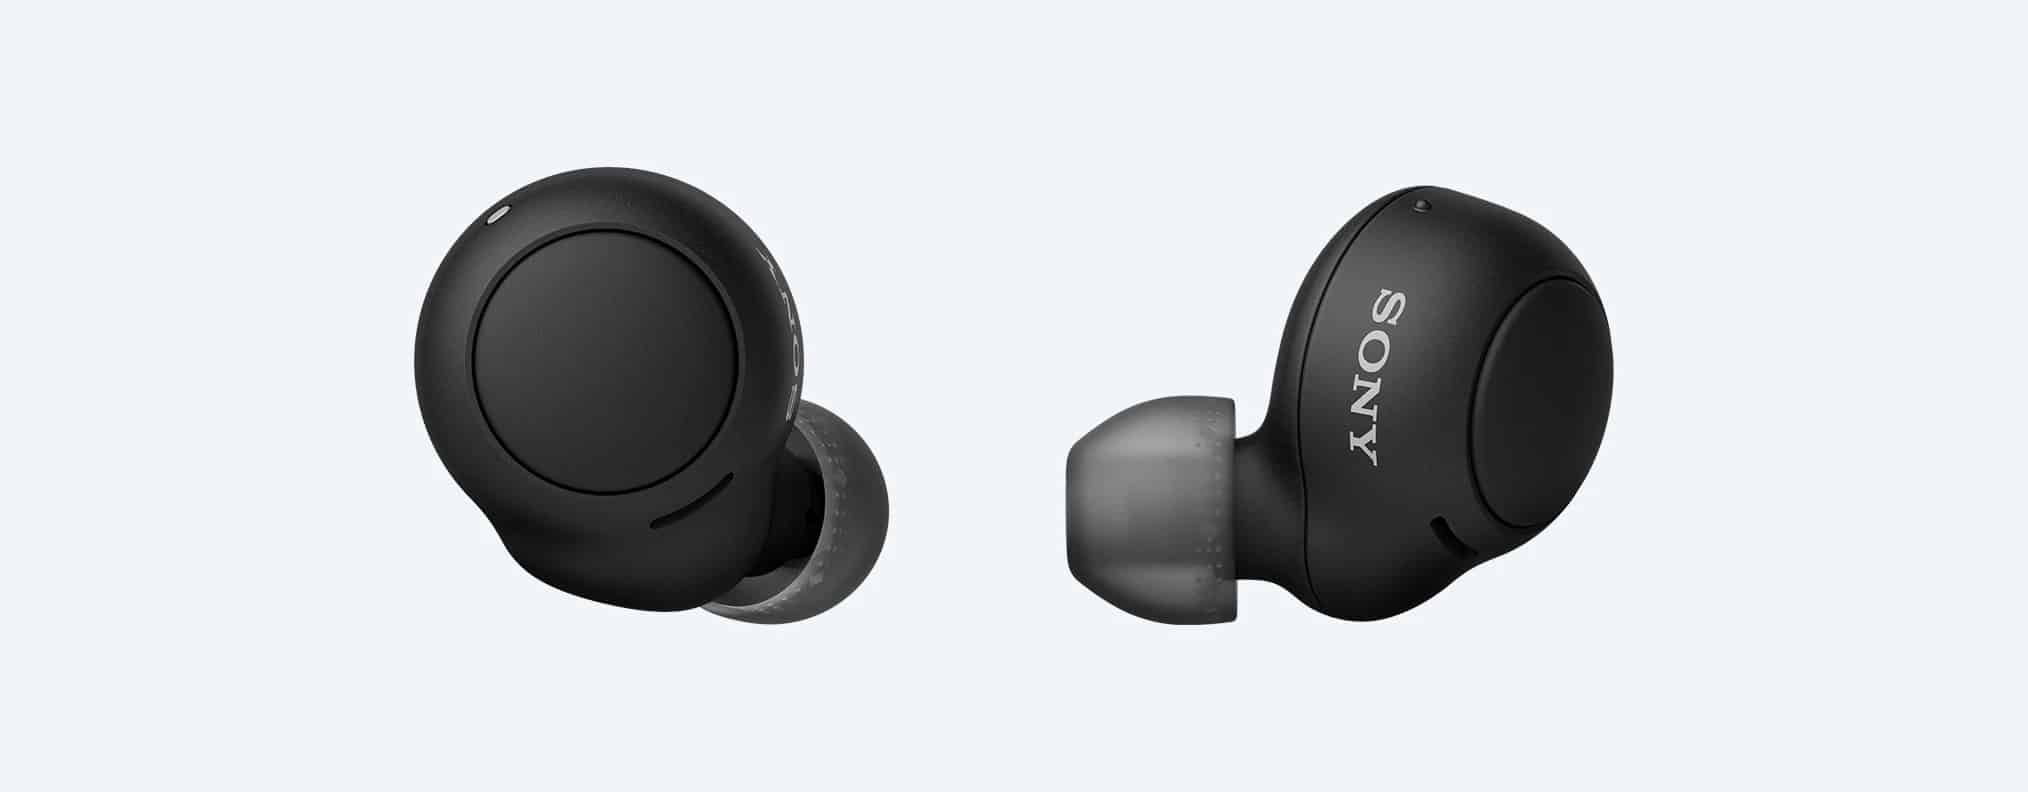 Sony 全無線耳機系列增加新成員 WF-C500 登場